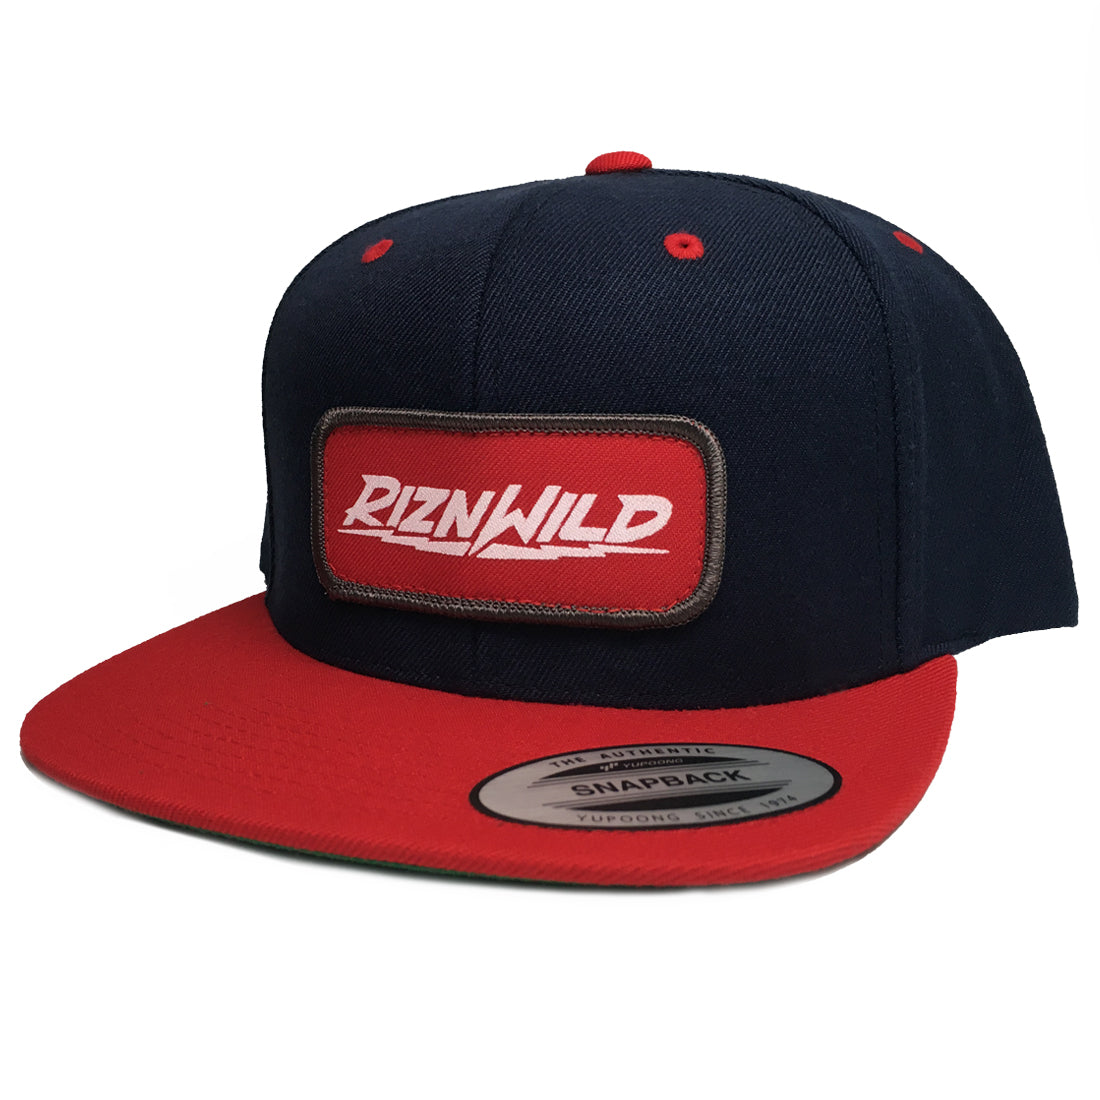 RIZNWILD | Flex snapback hat in Navy/Red